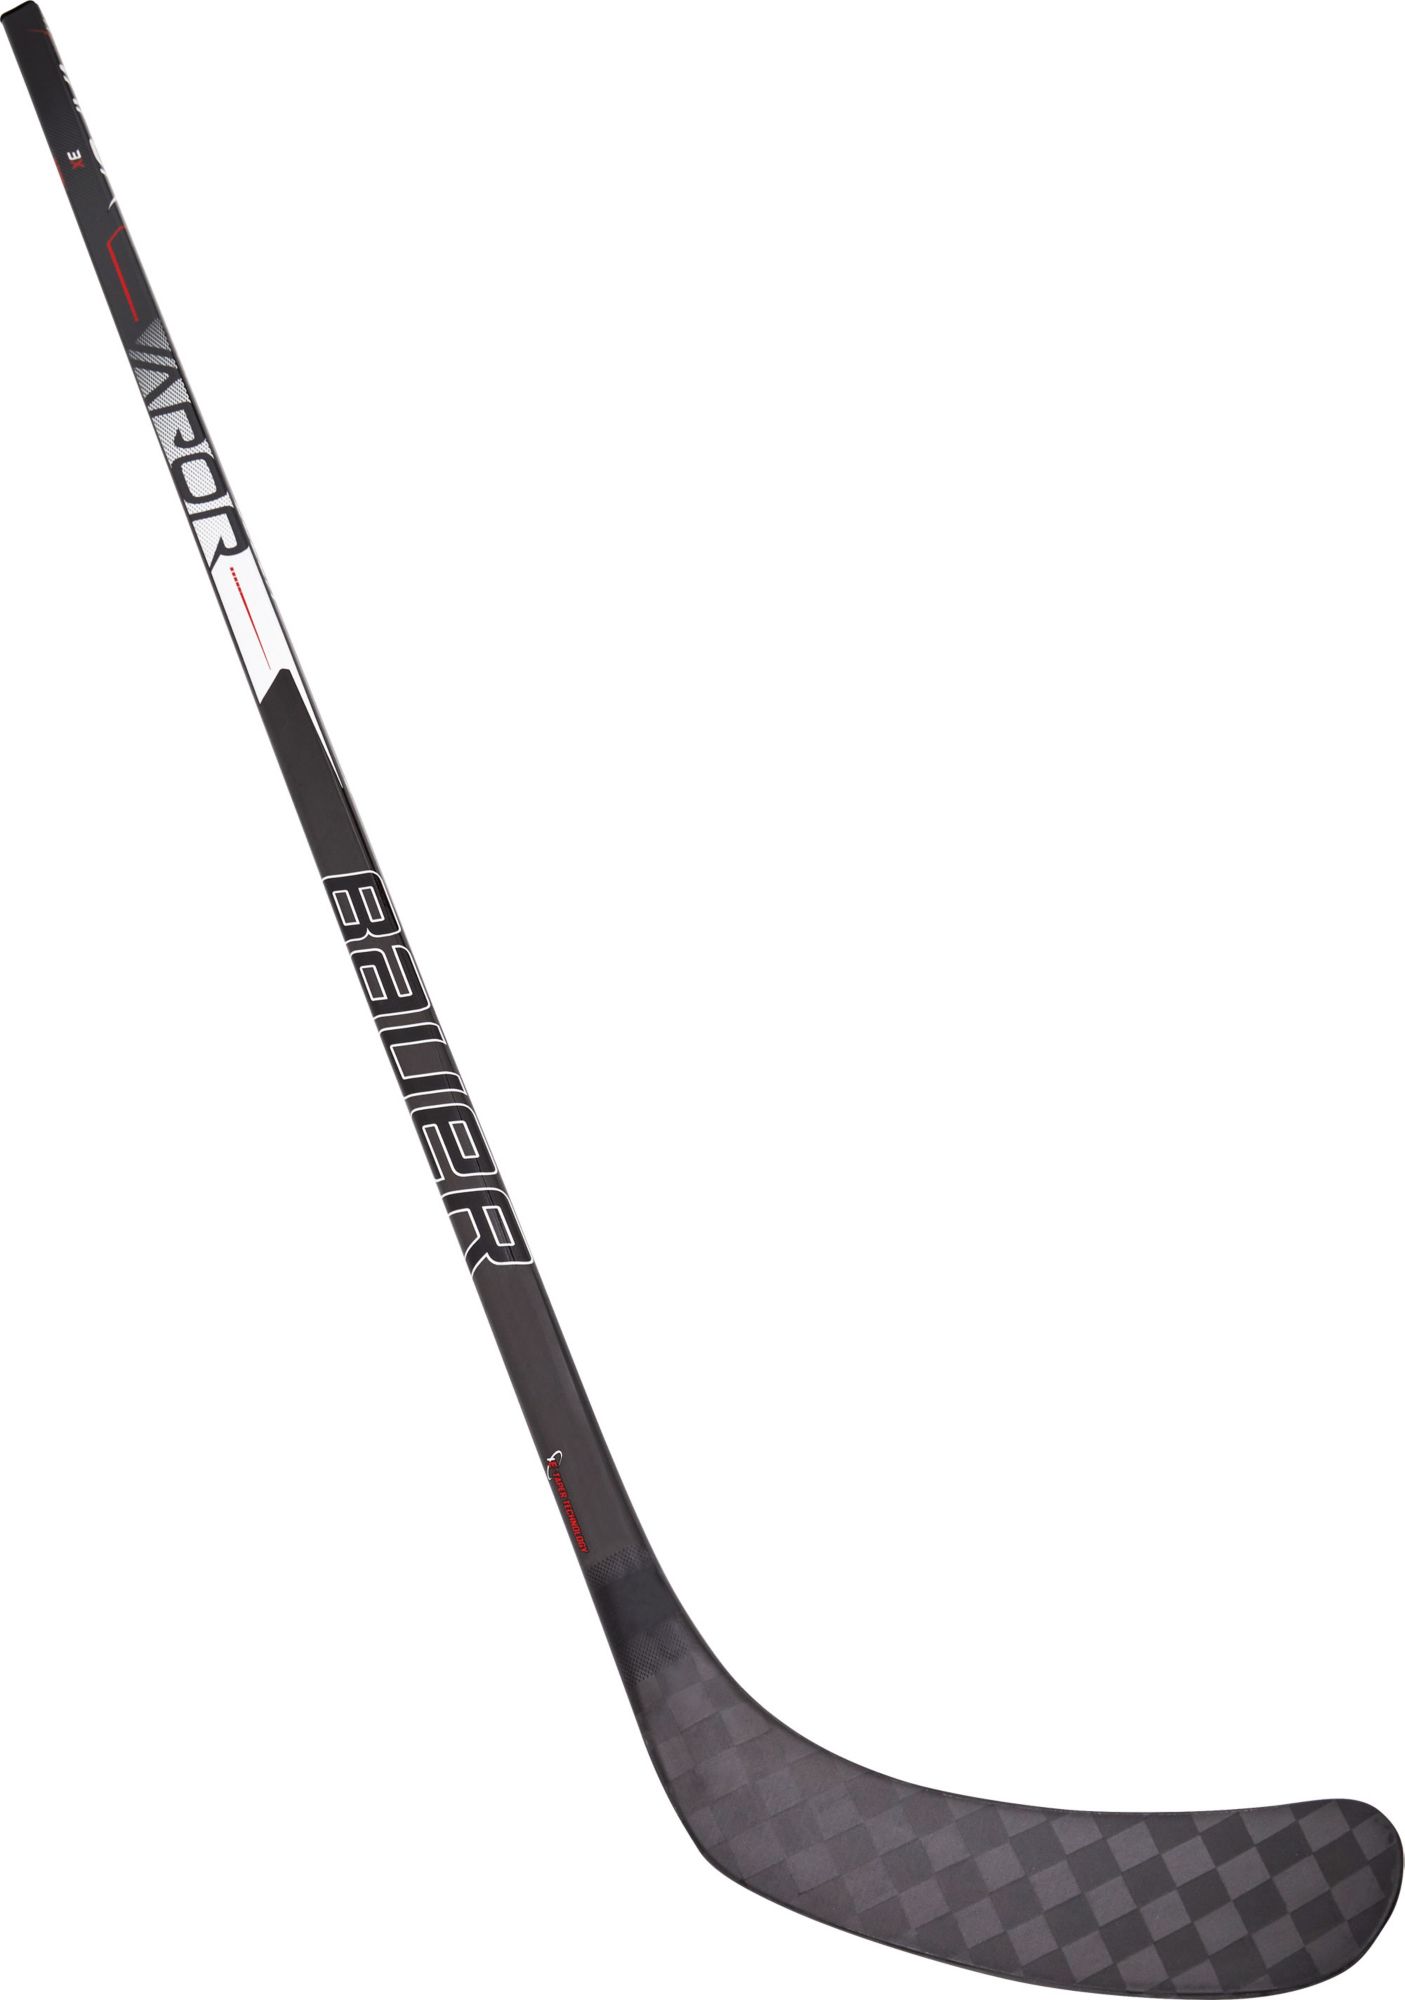 Bauer Vapor 3X Grip Ice Hockey Stick - Intermediate